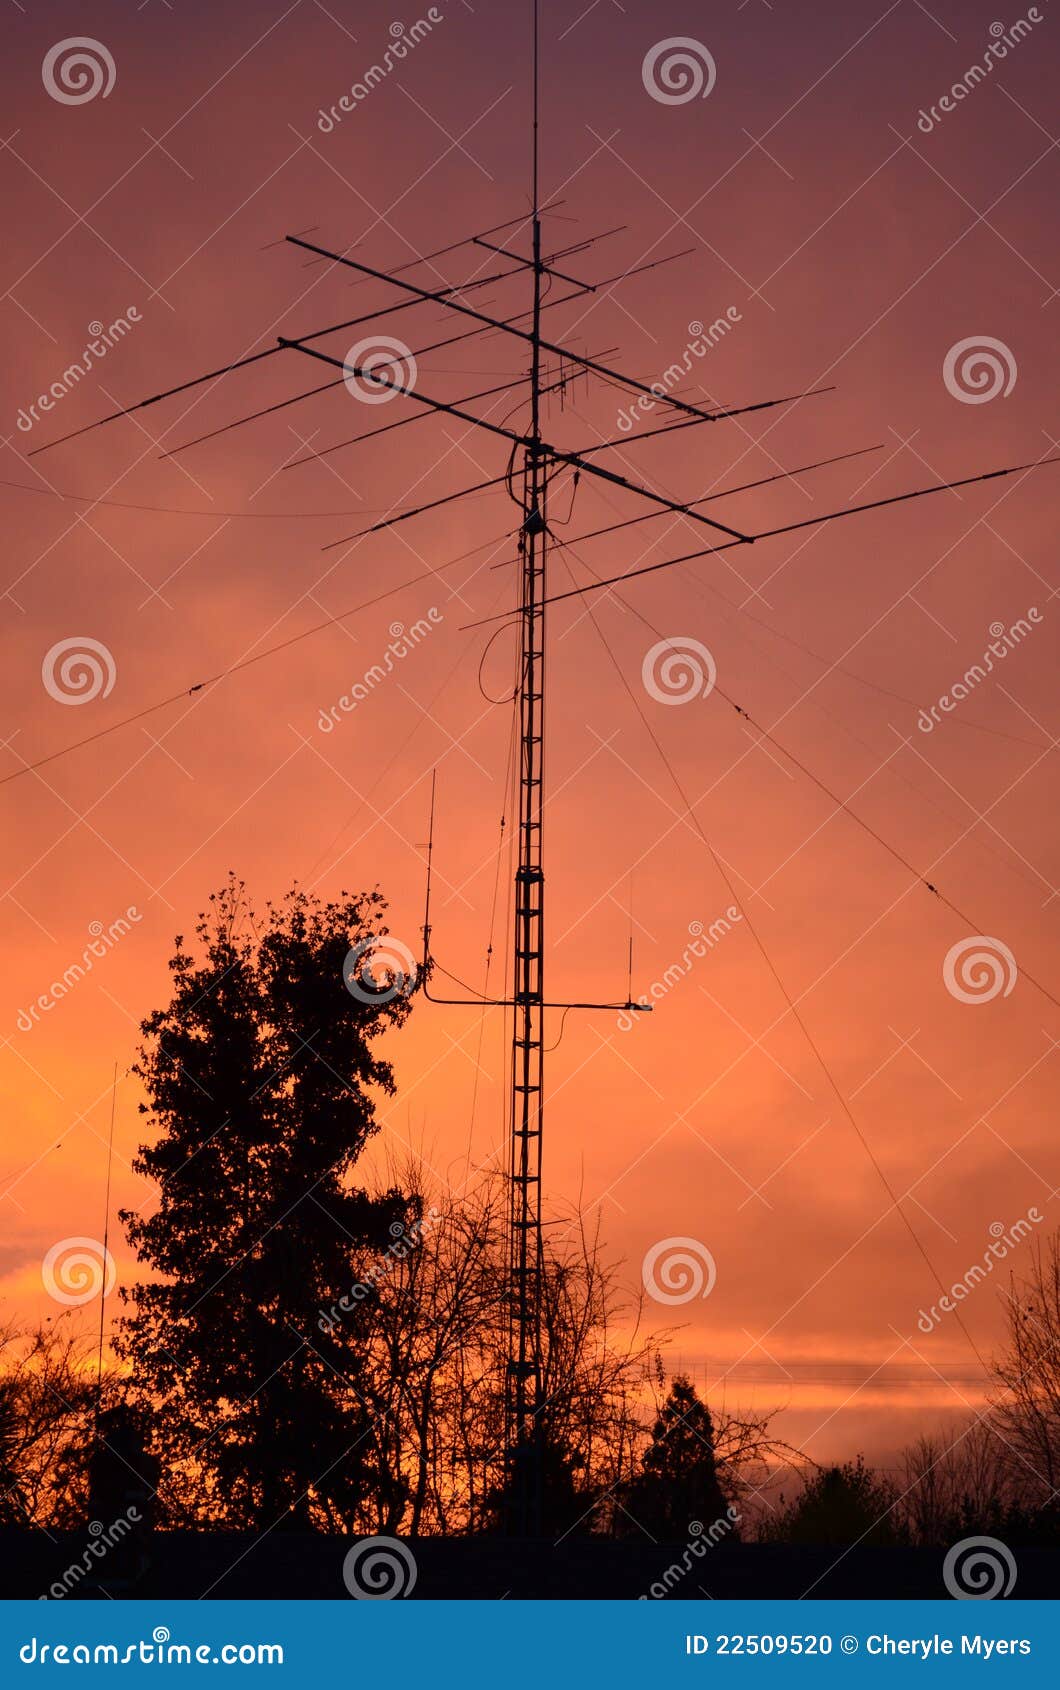 ham radio tower